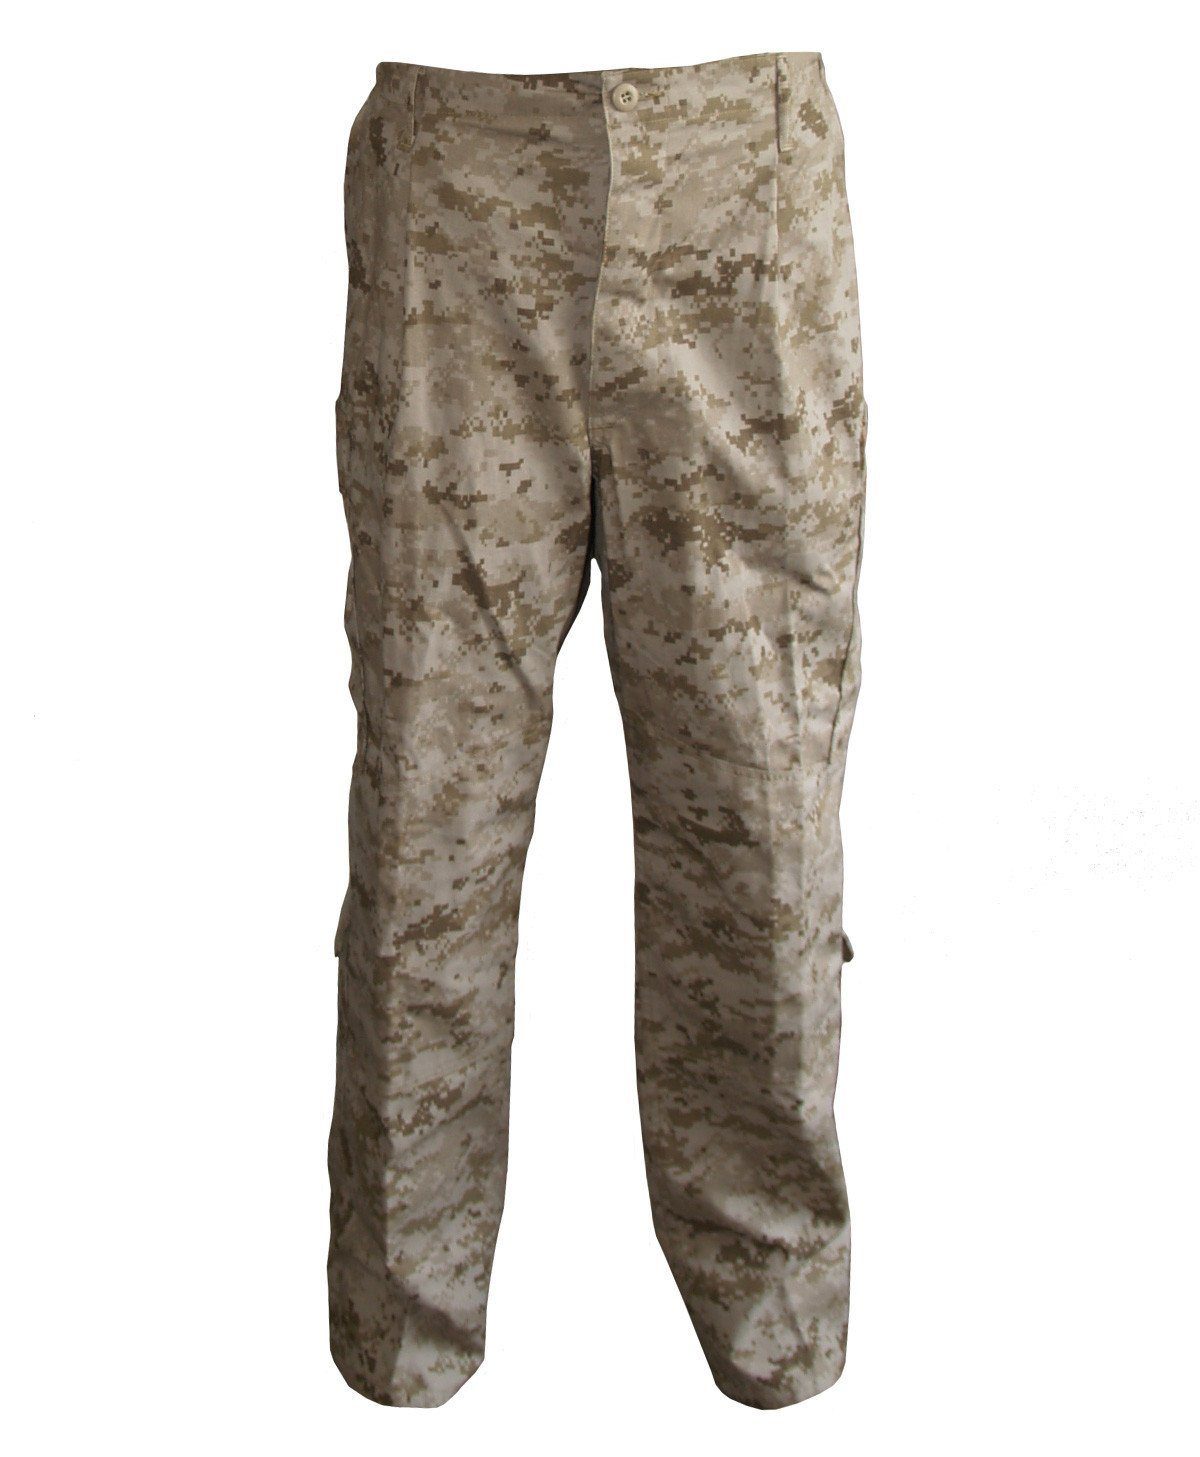 USMC FROG Fire Resistant Combat Pants Desert (SURPLUS)